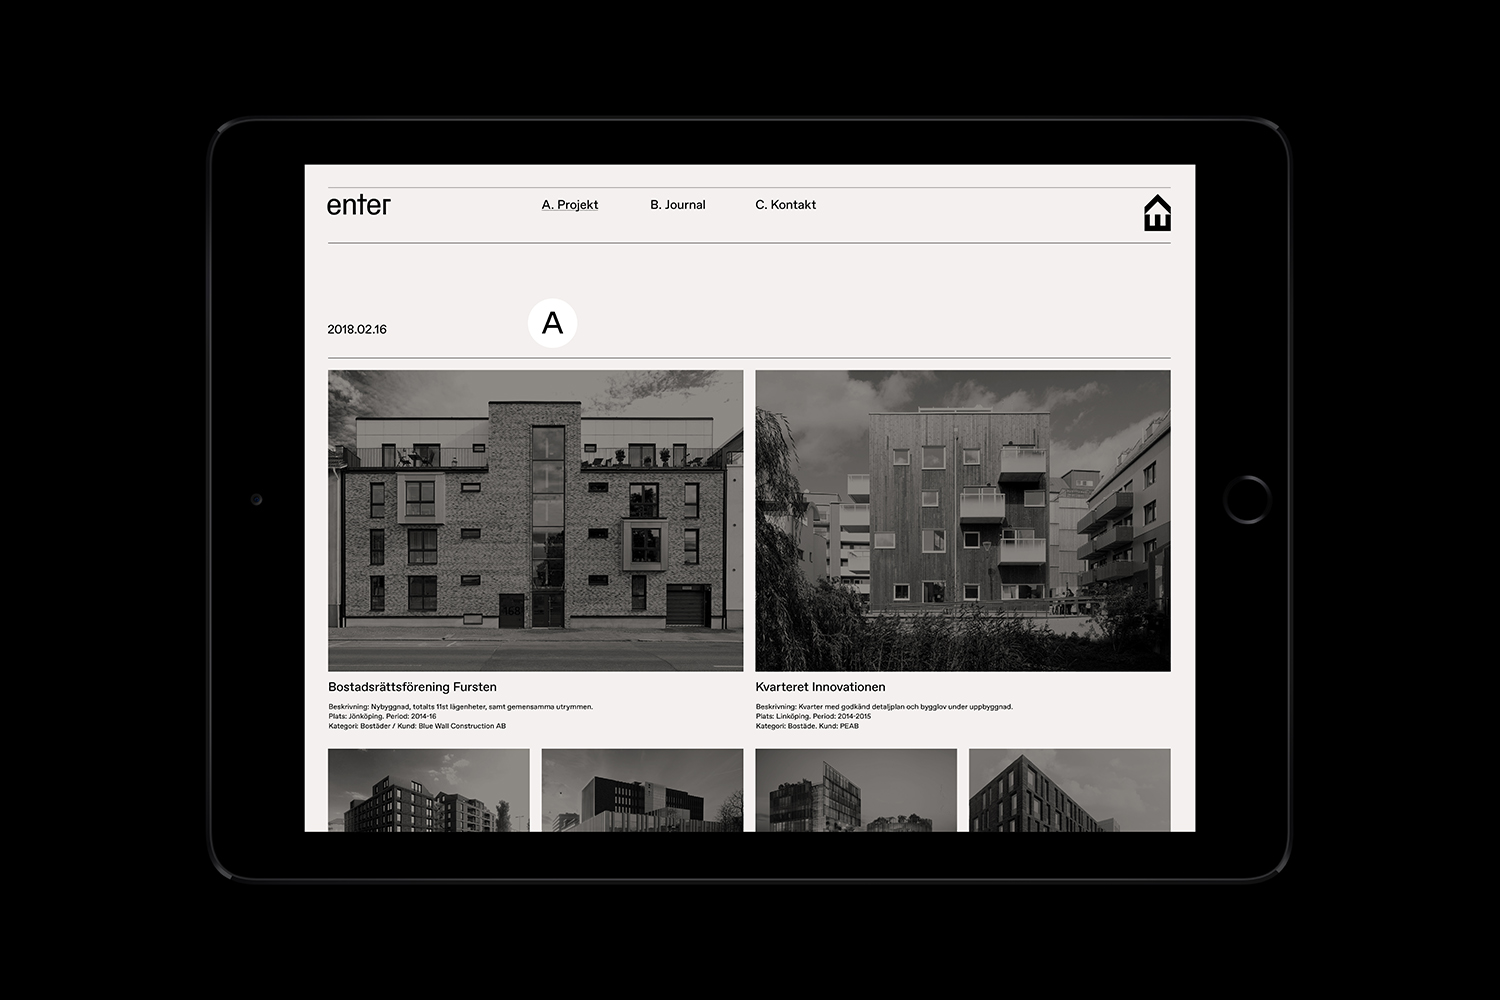 Graphic identity and website designed by Lundgren+Lindqvist for Swedish architecture studio Lundgren+Lindqvist